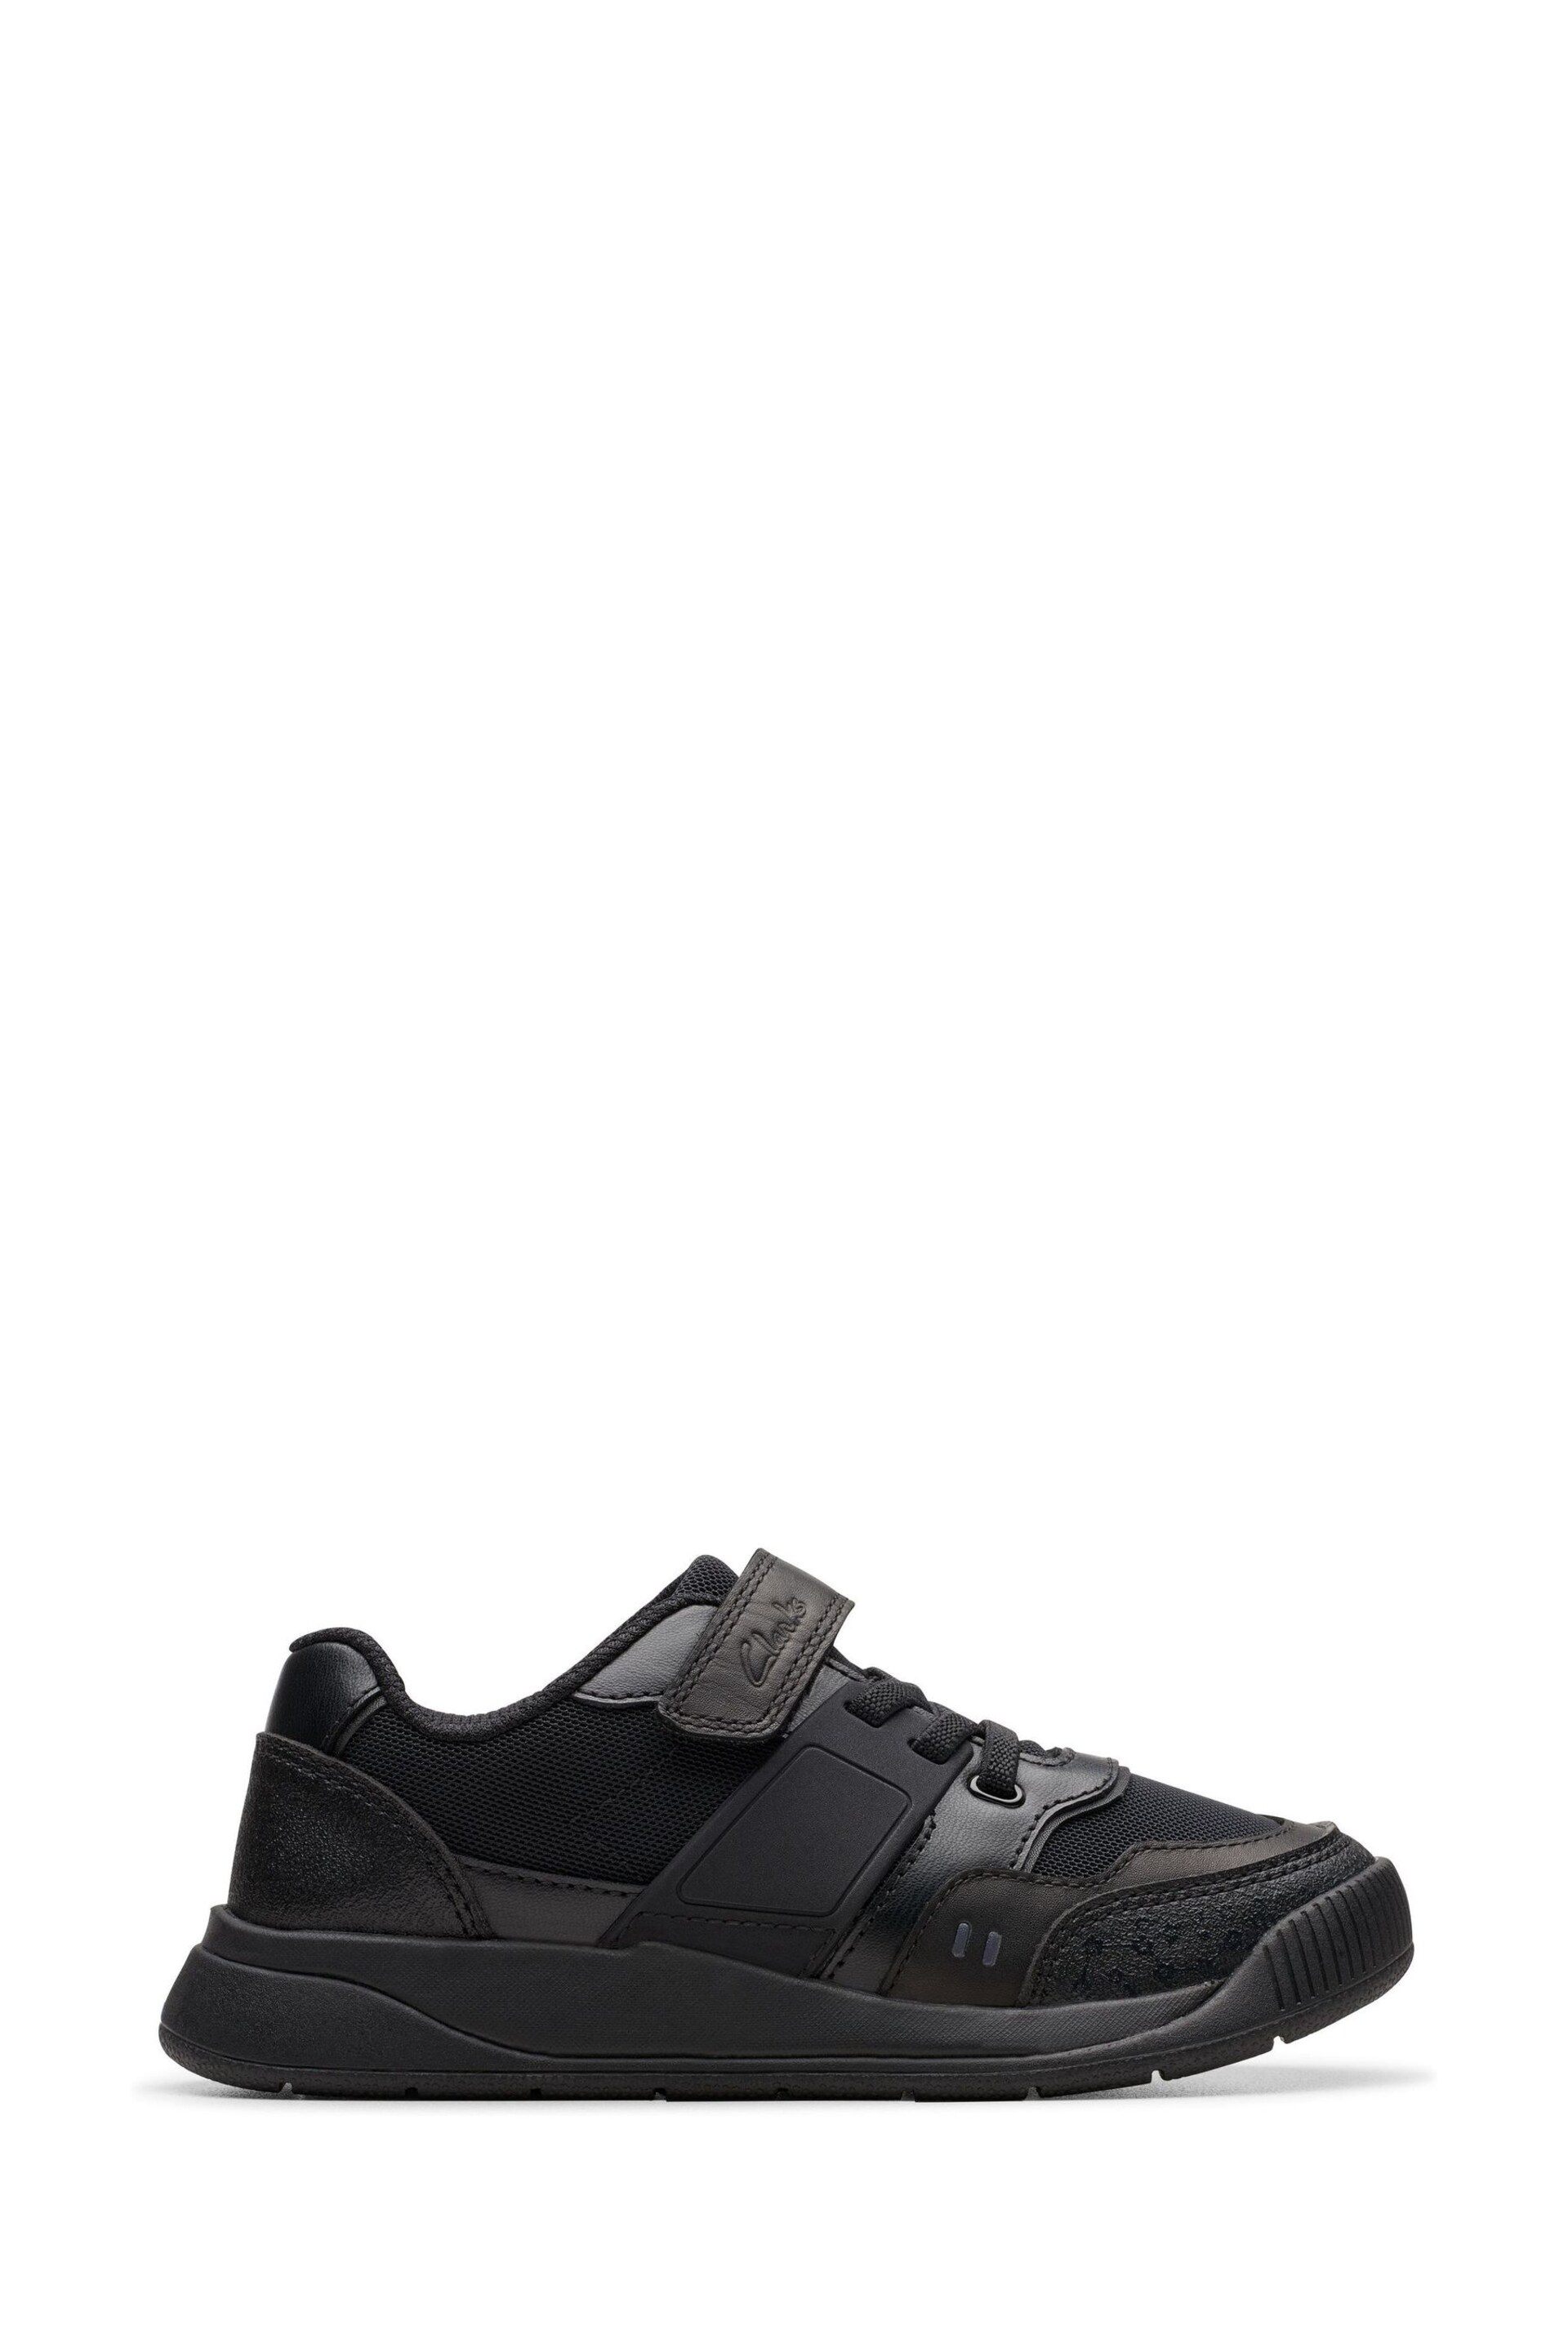 Clarks Black Wide Fit (G) Lune Flex Shoes - Image 1 of 4